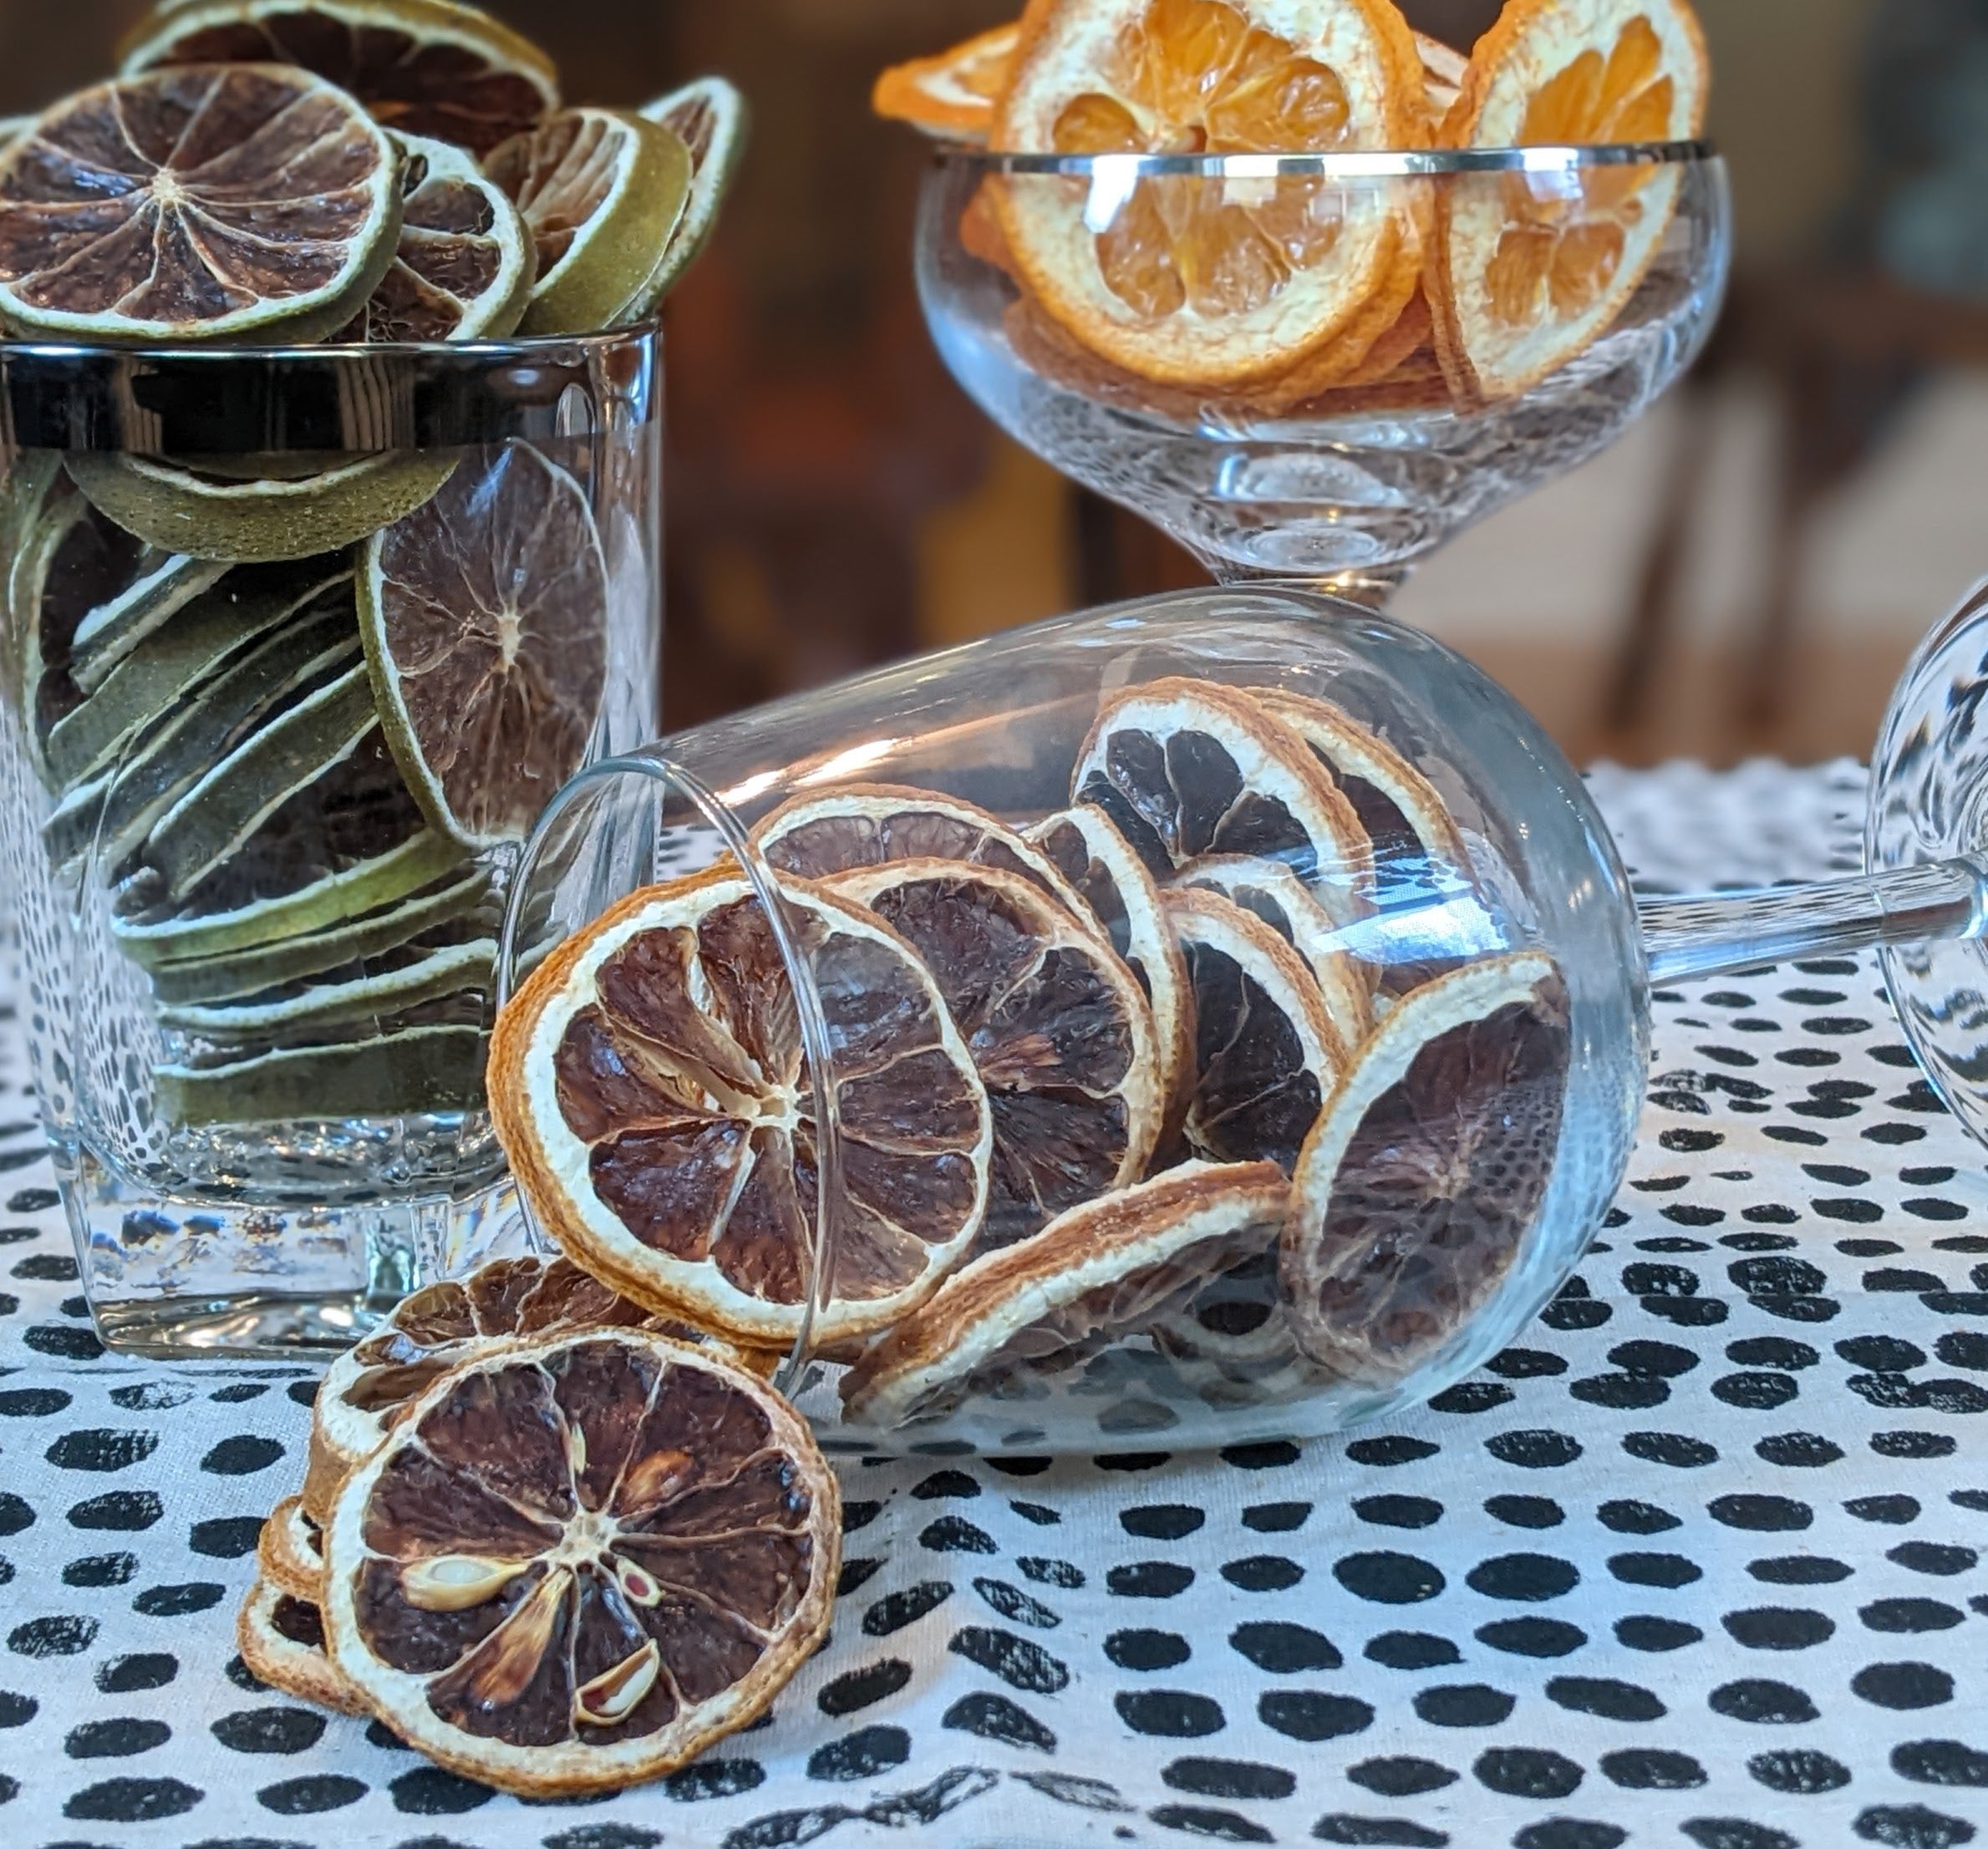 Cocktail Garnish - Dehydrated Lemon Wheel, 3oz, 40+ Slices